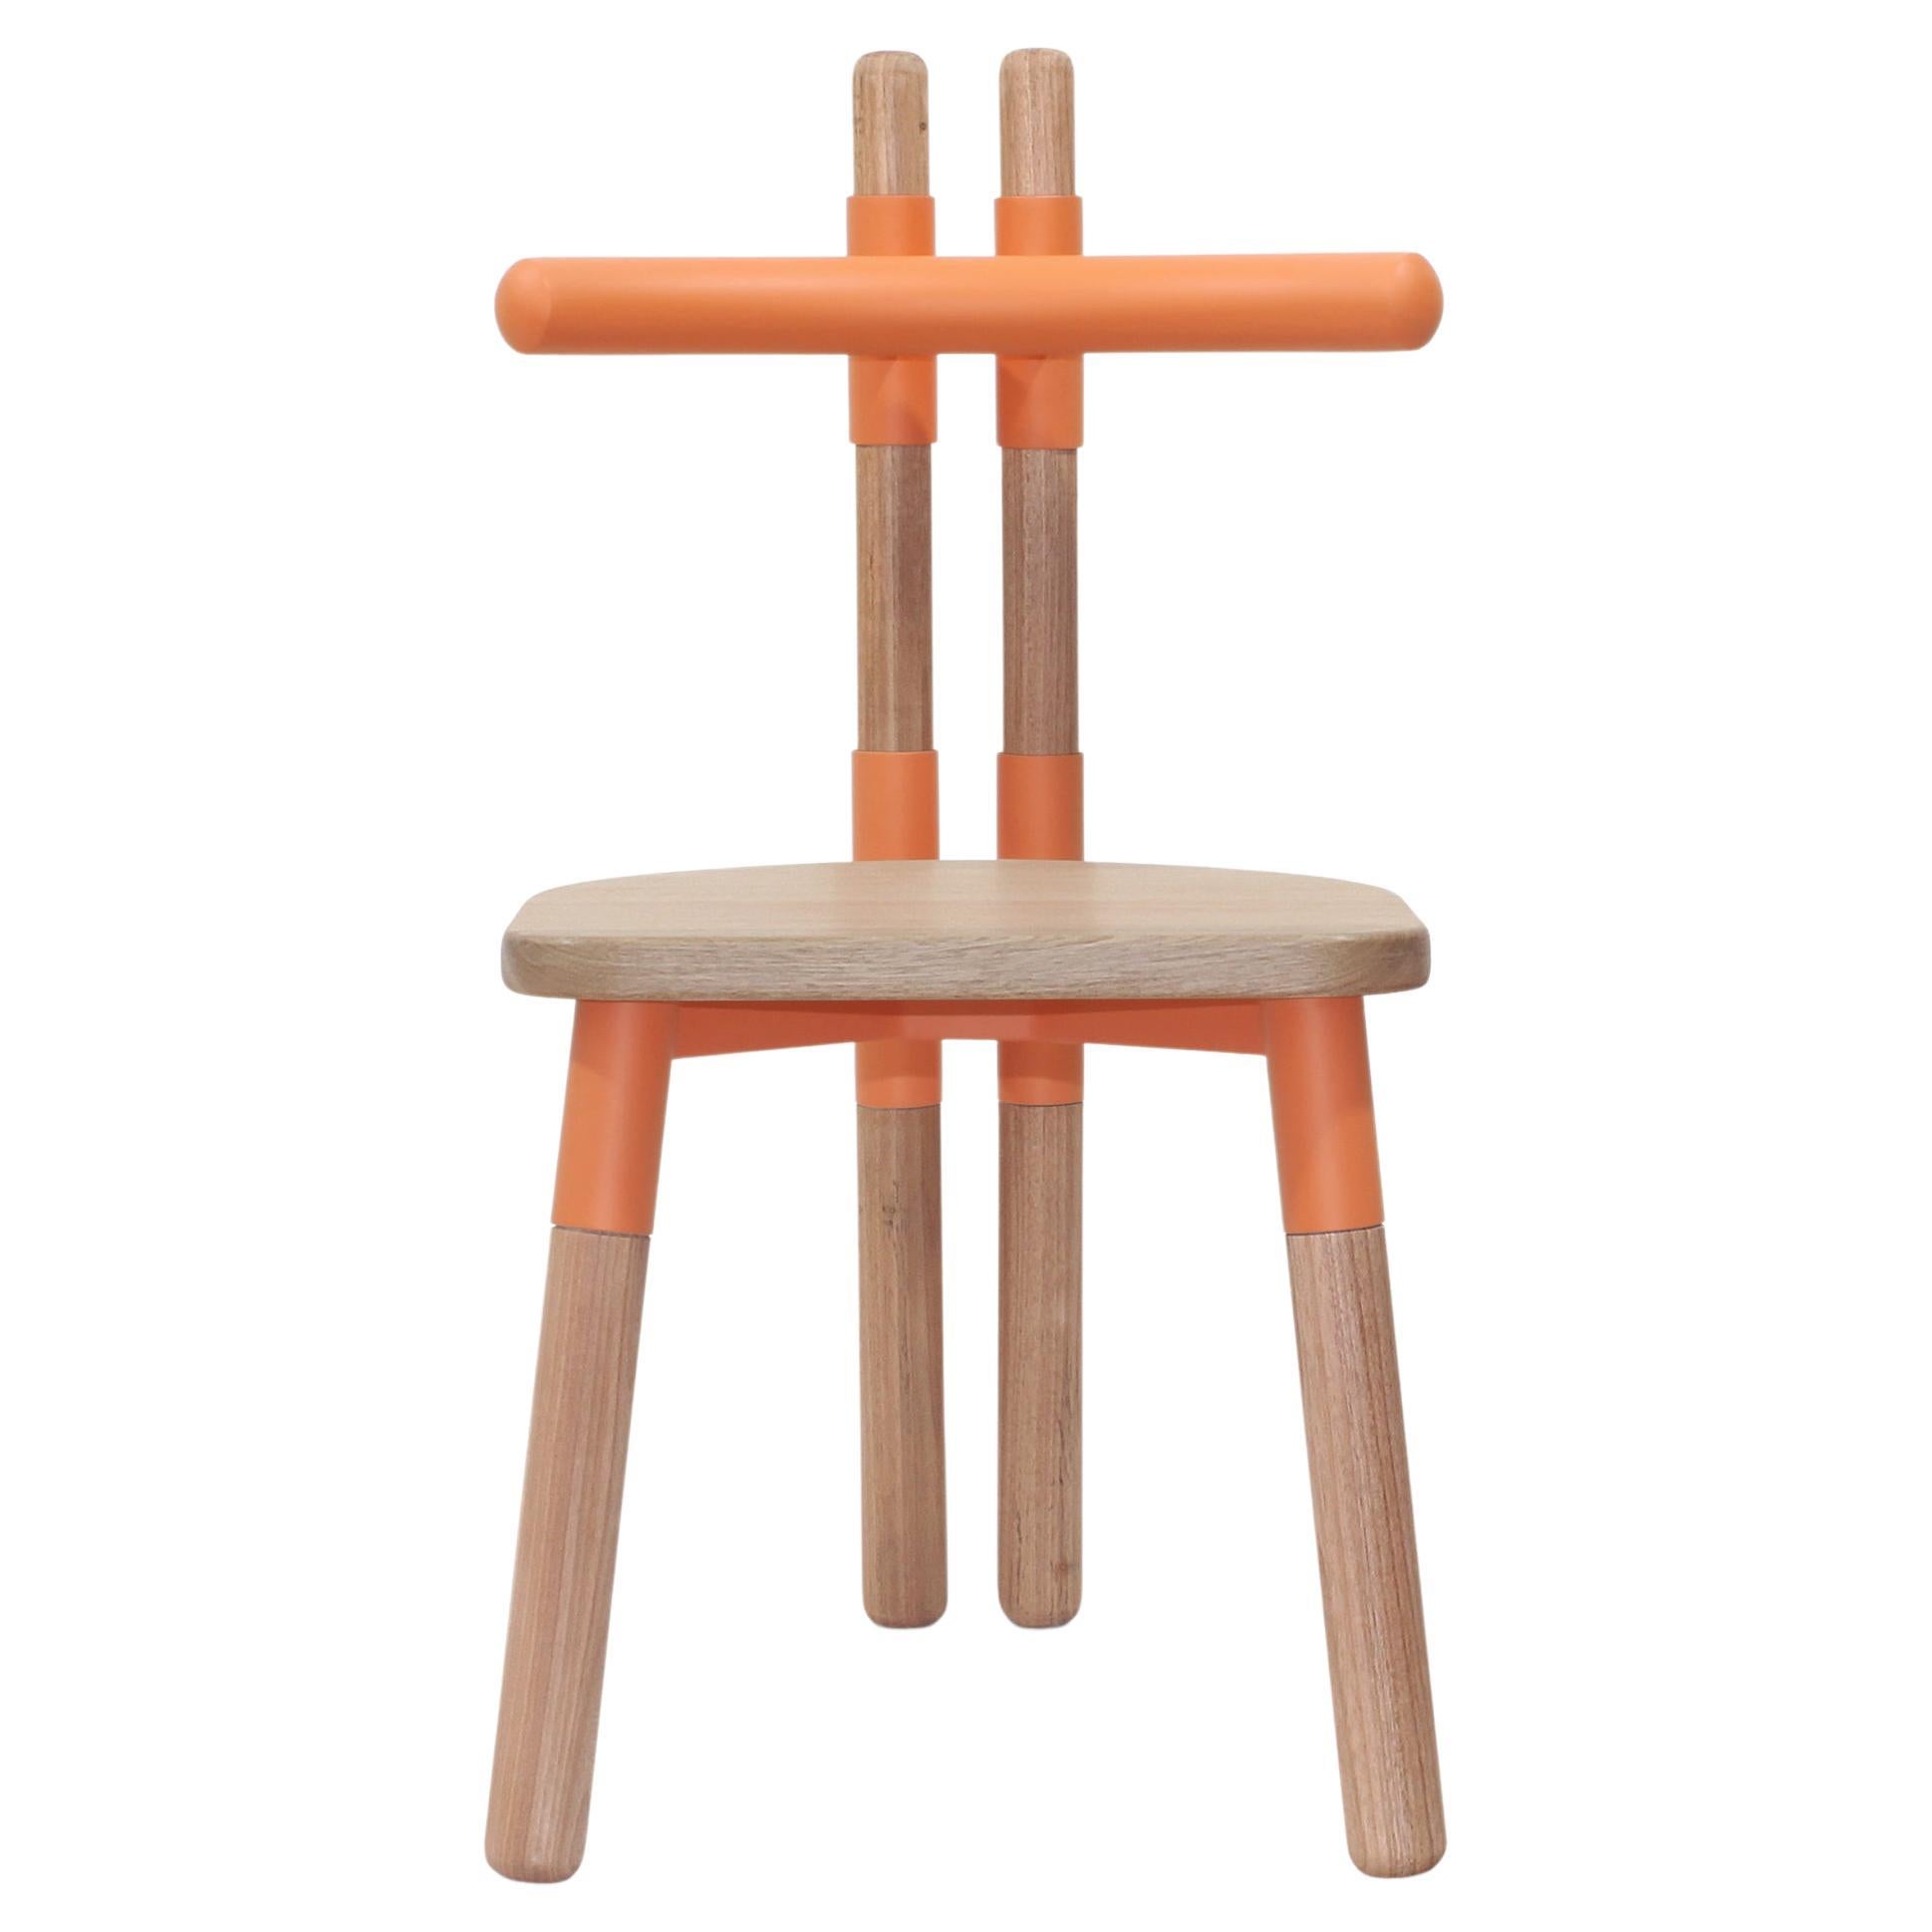 Handmade PK12 Chair, Carbon Steel Structure & Turned Wood Legs by Paulo Kobylka